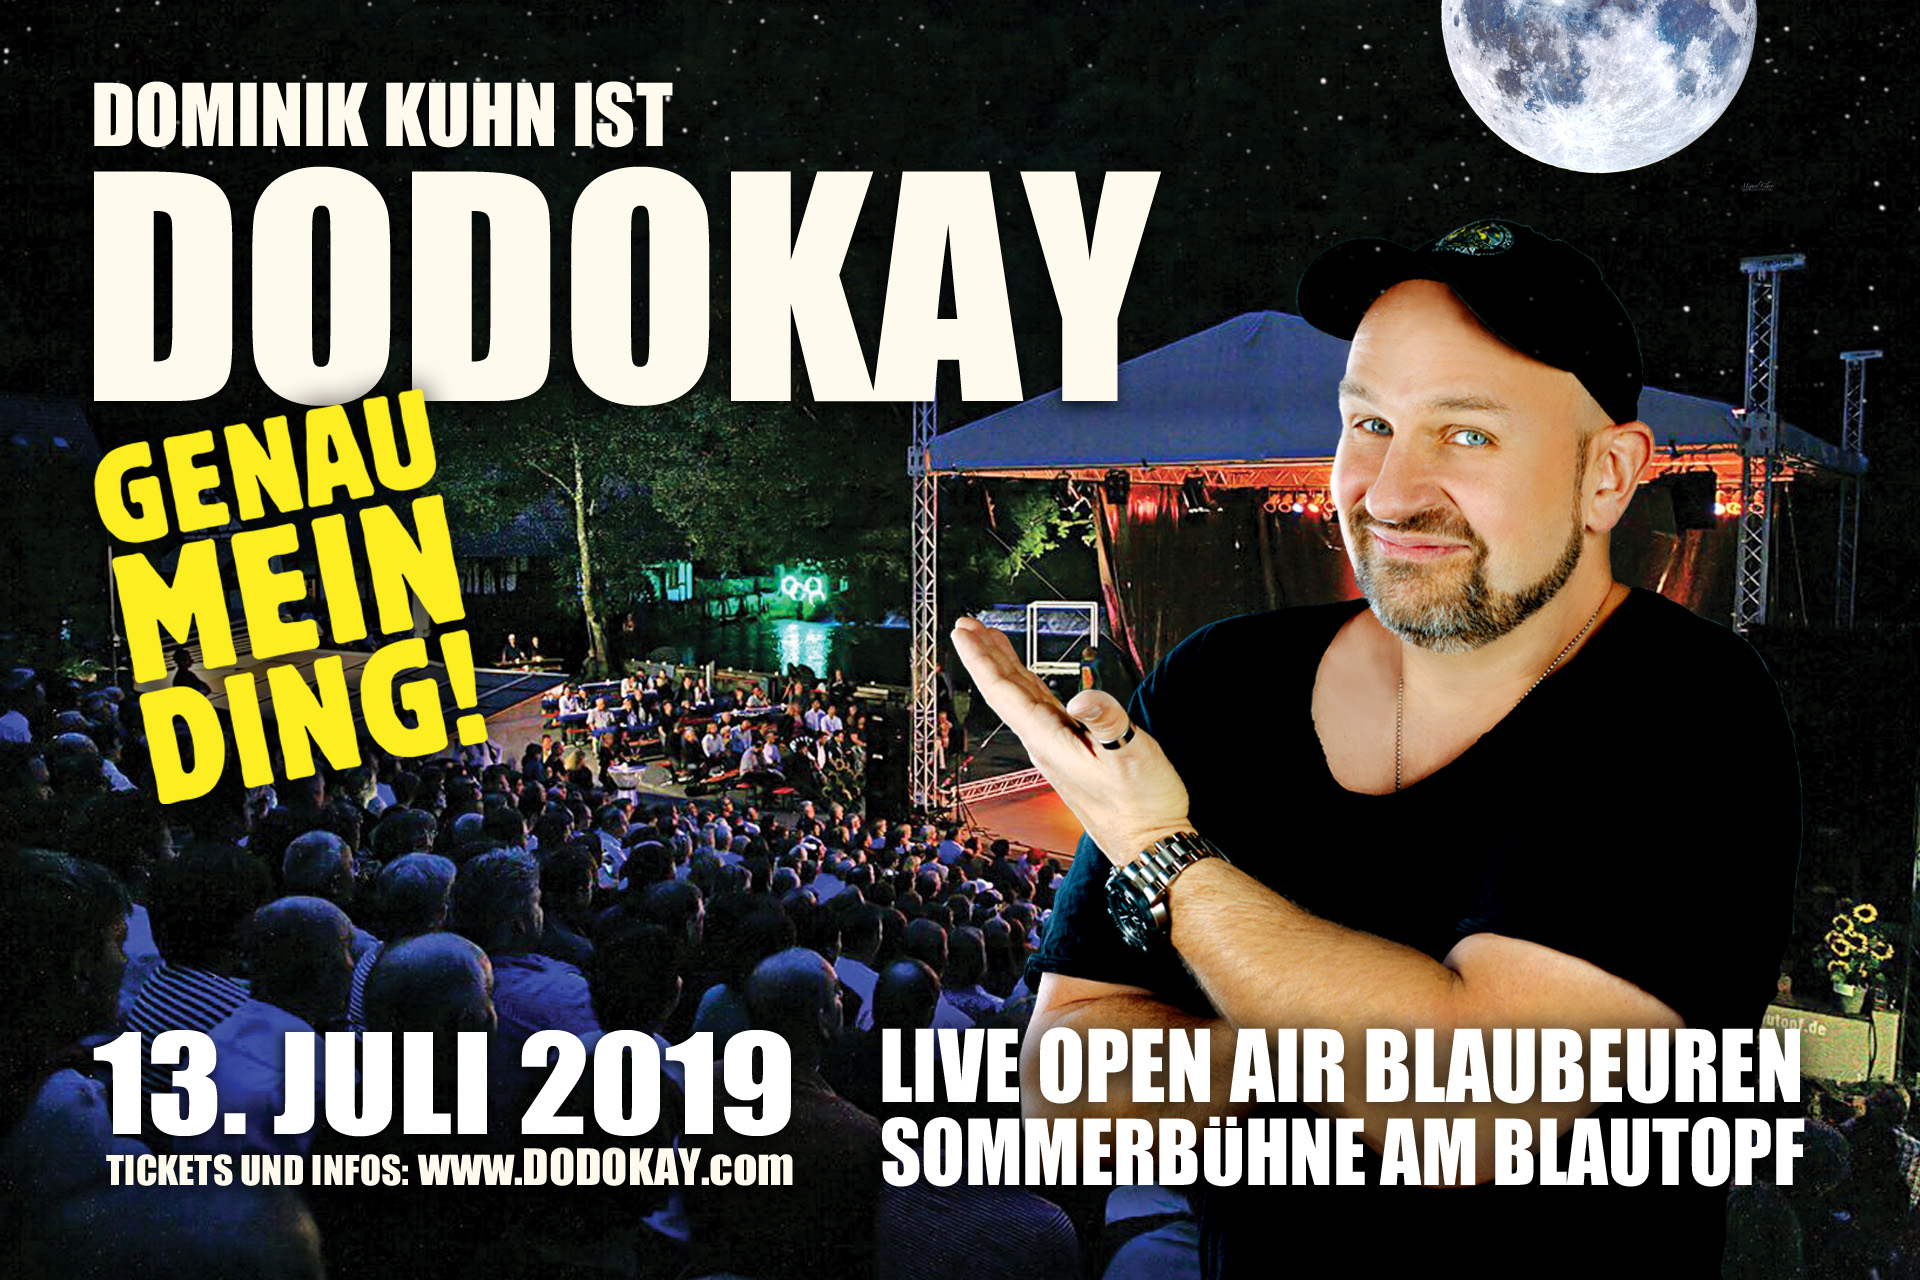 Dodokay live Blaubeuren Sommerbühne Blautopf